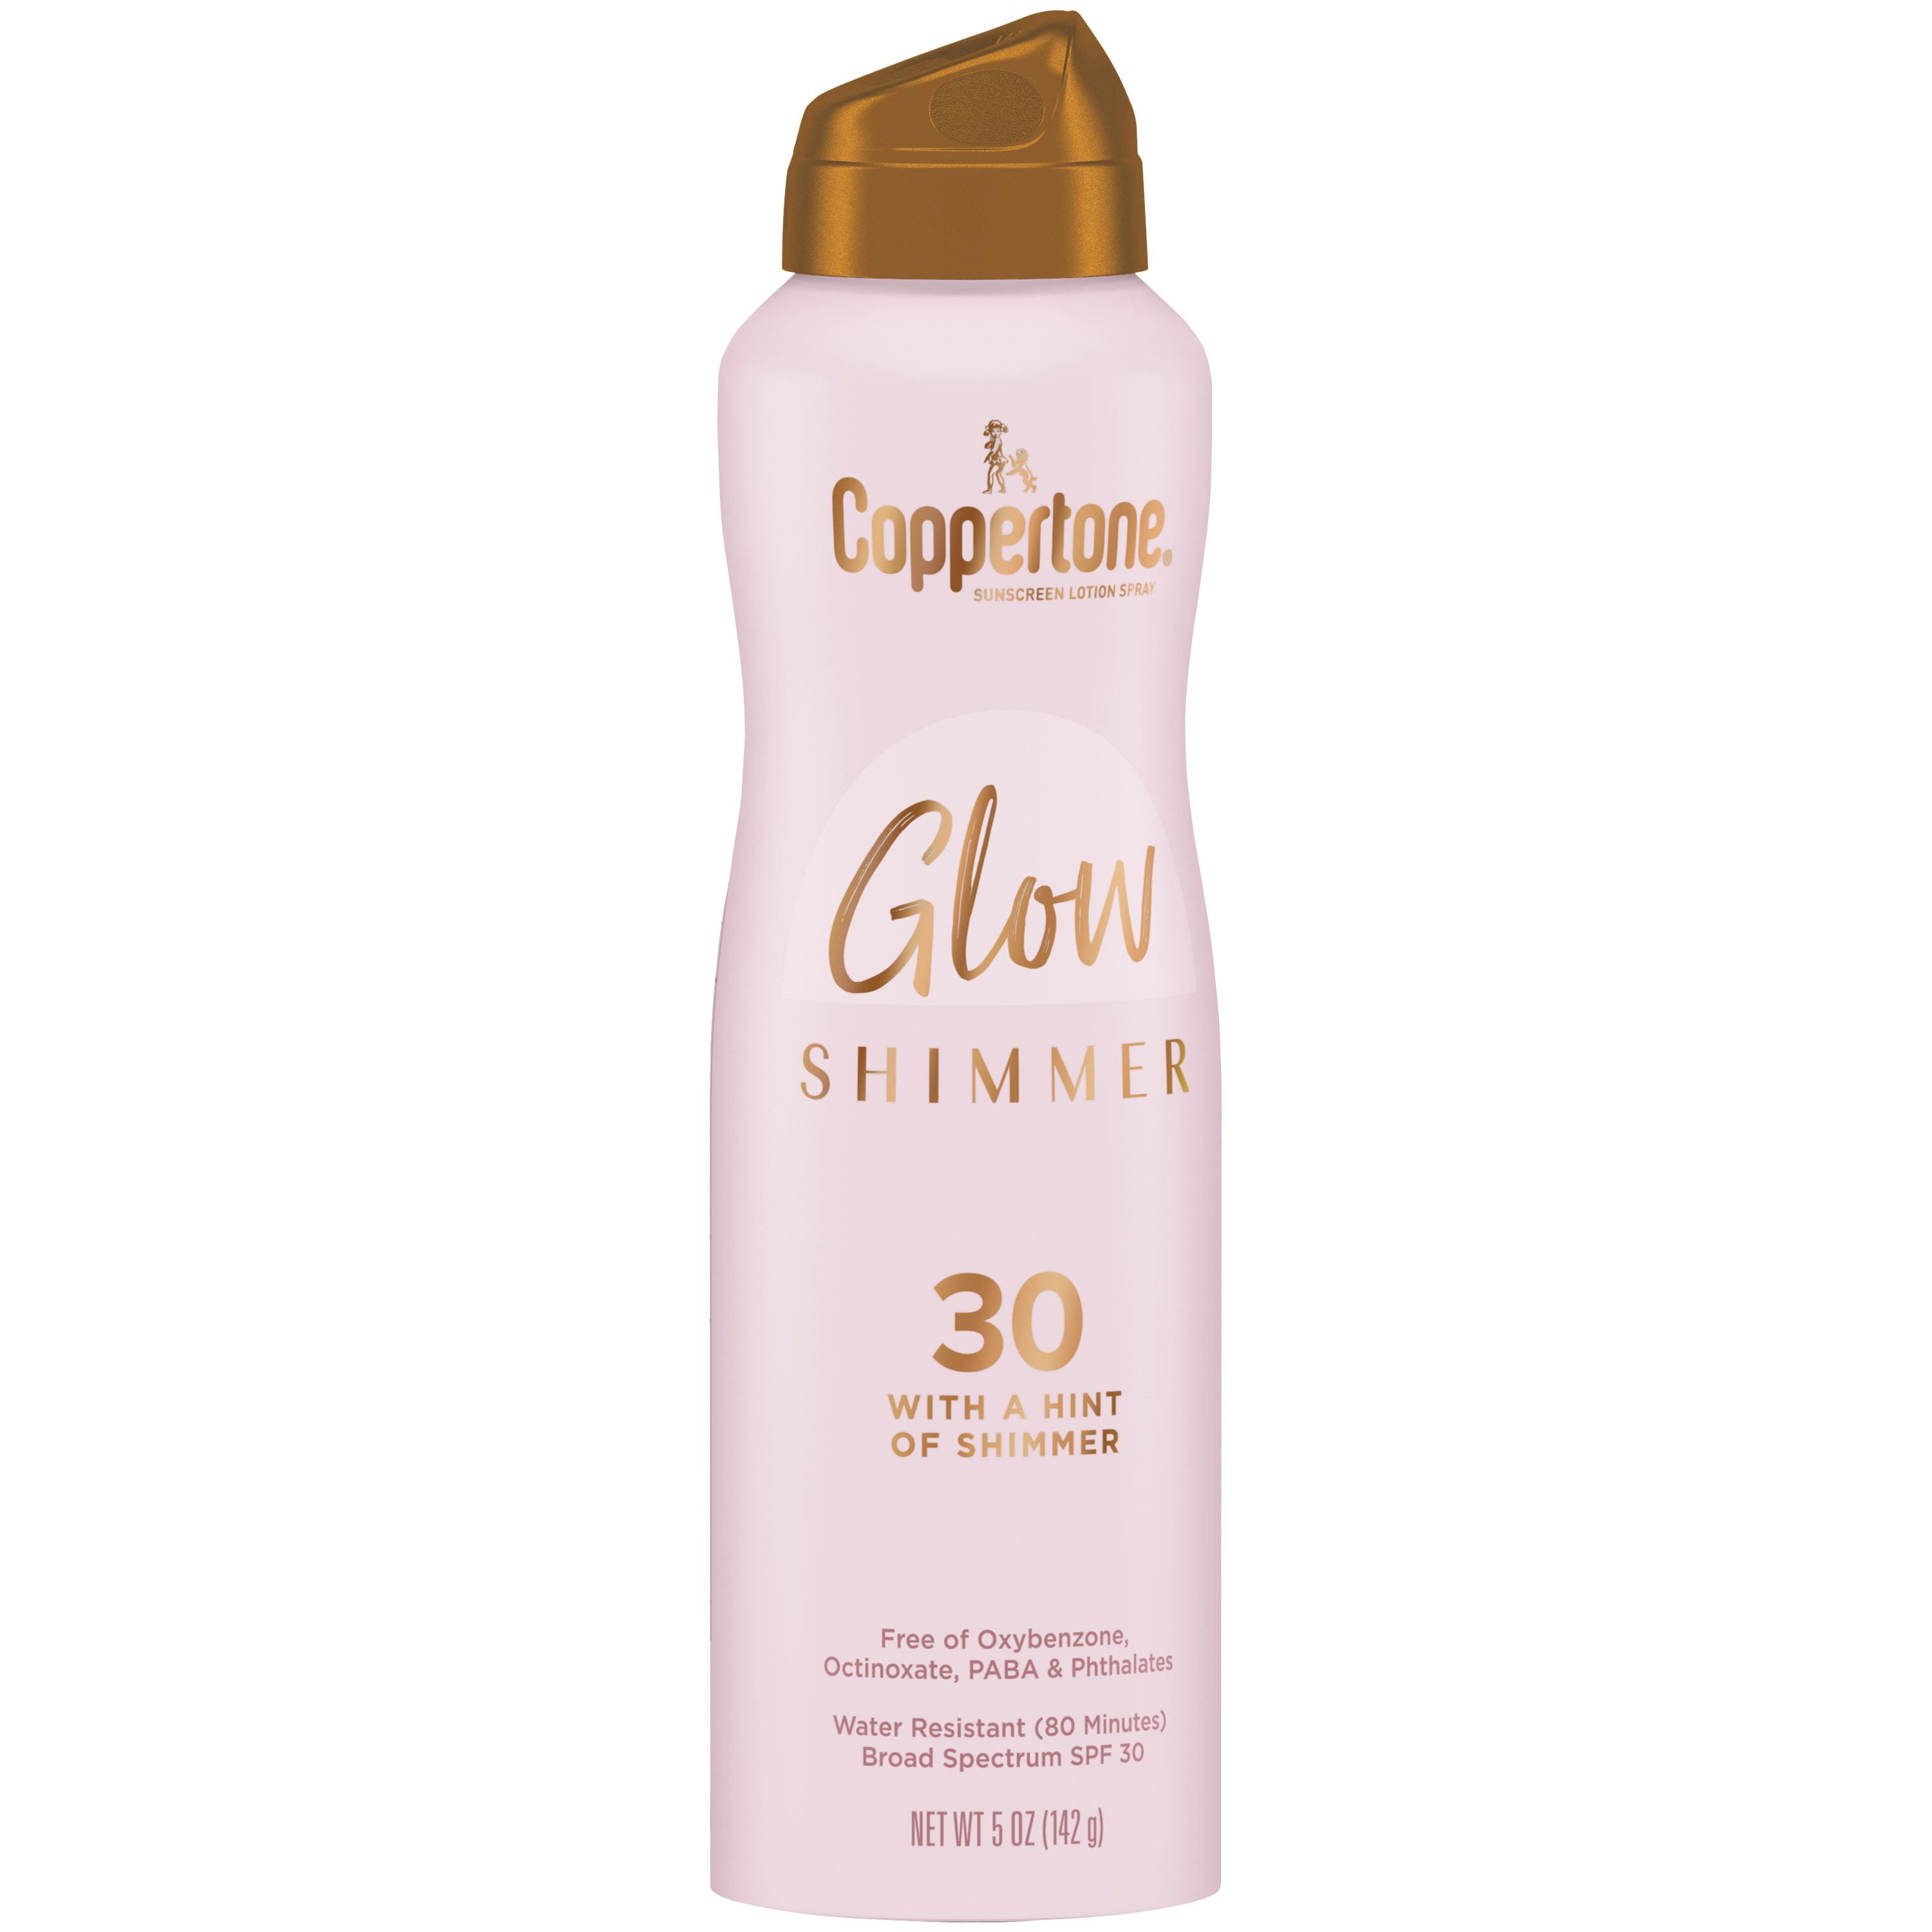 Coppertone Glow Shimmer SPF 30 Sunscreen Spray